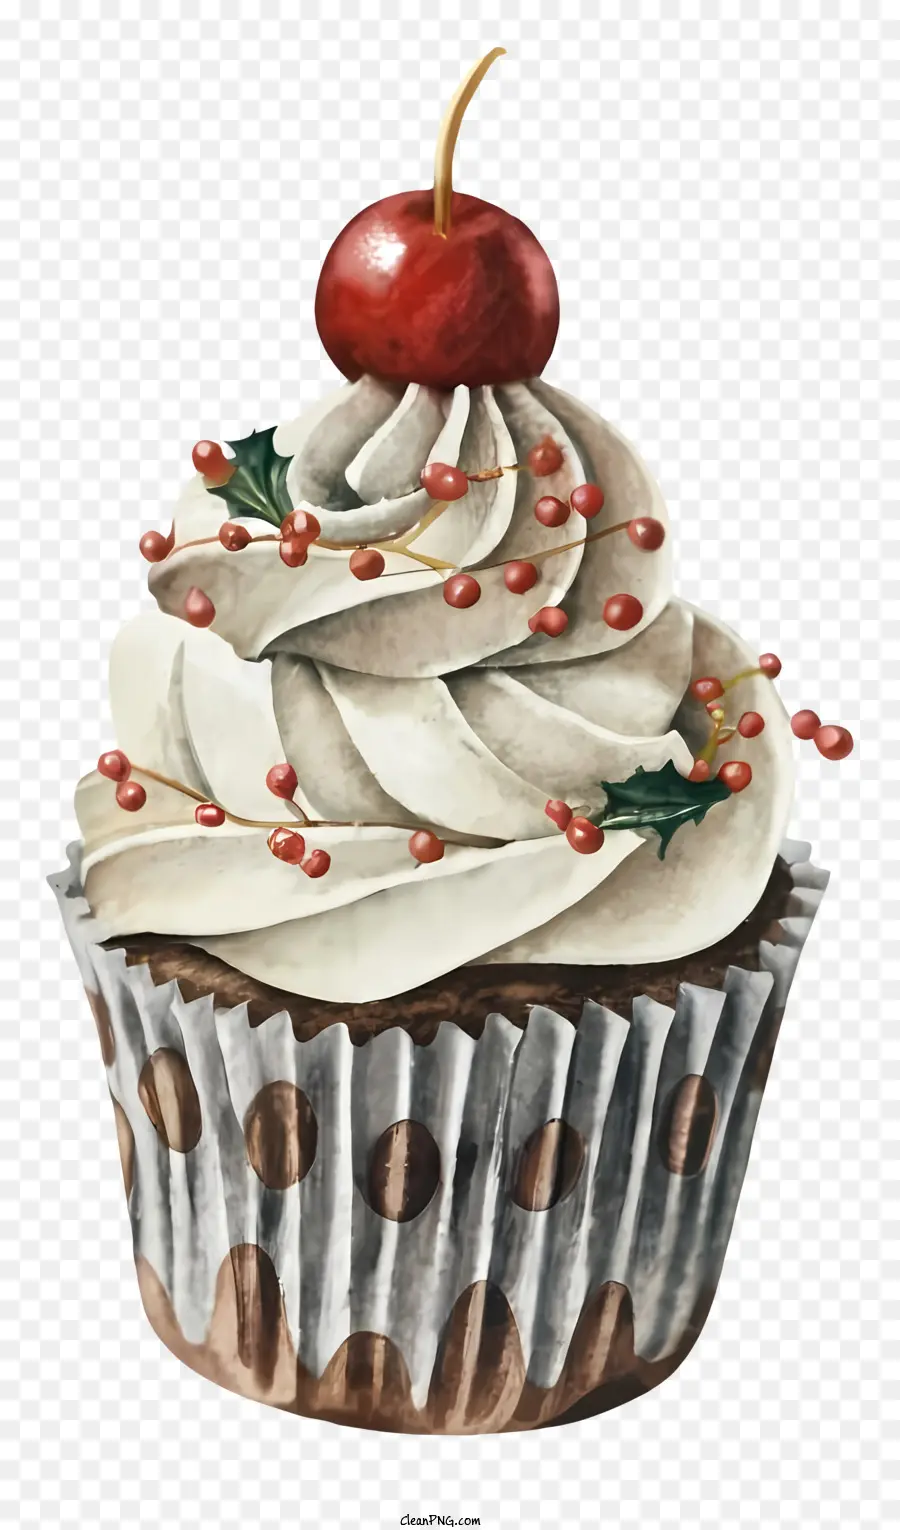 cupcake cream frosting red cherry polka dots dark background